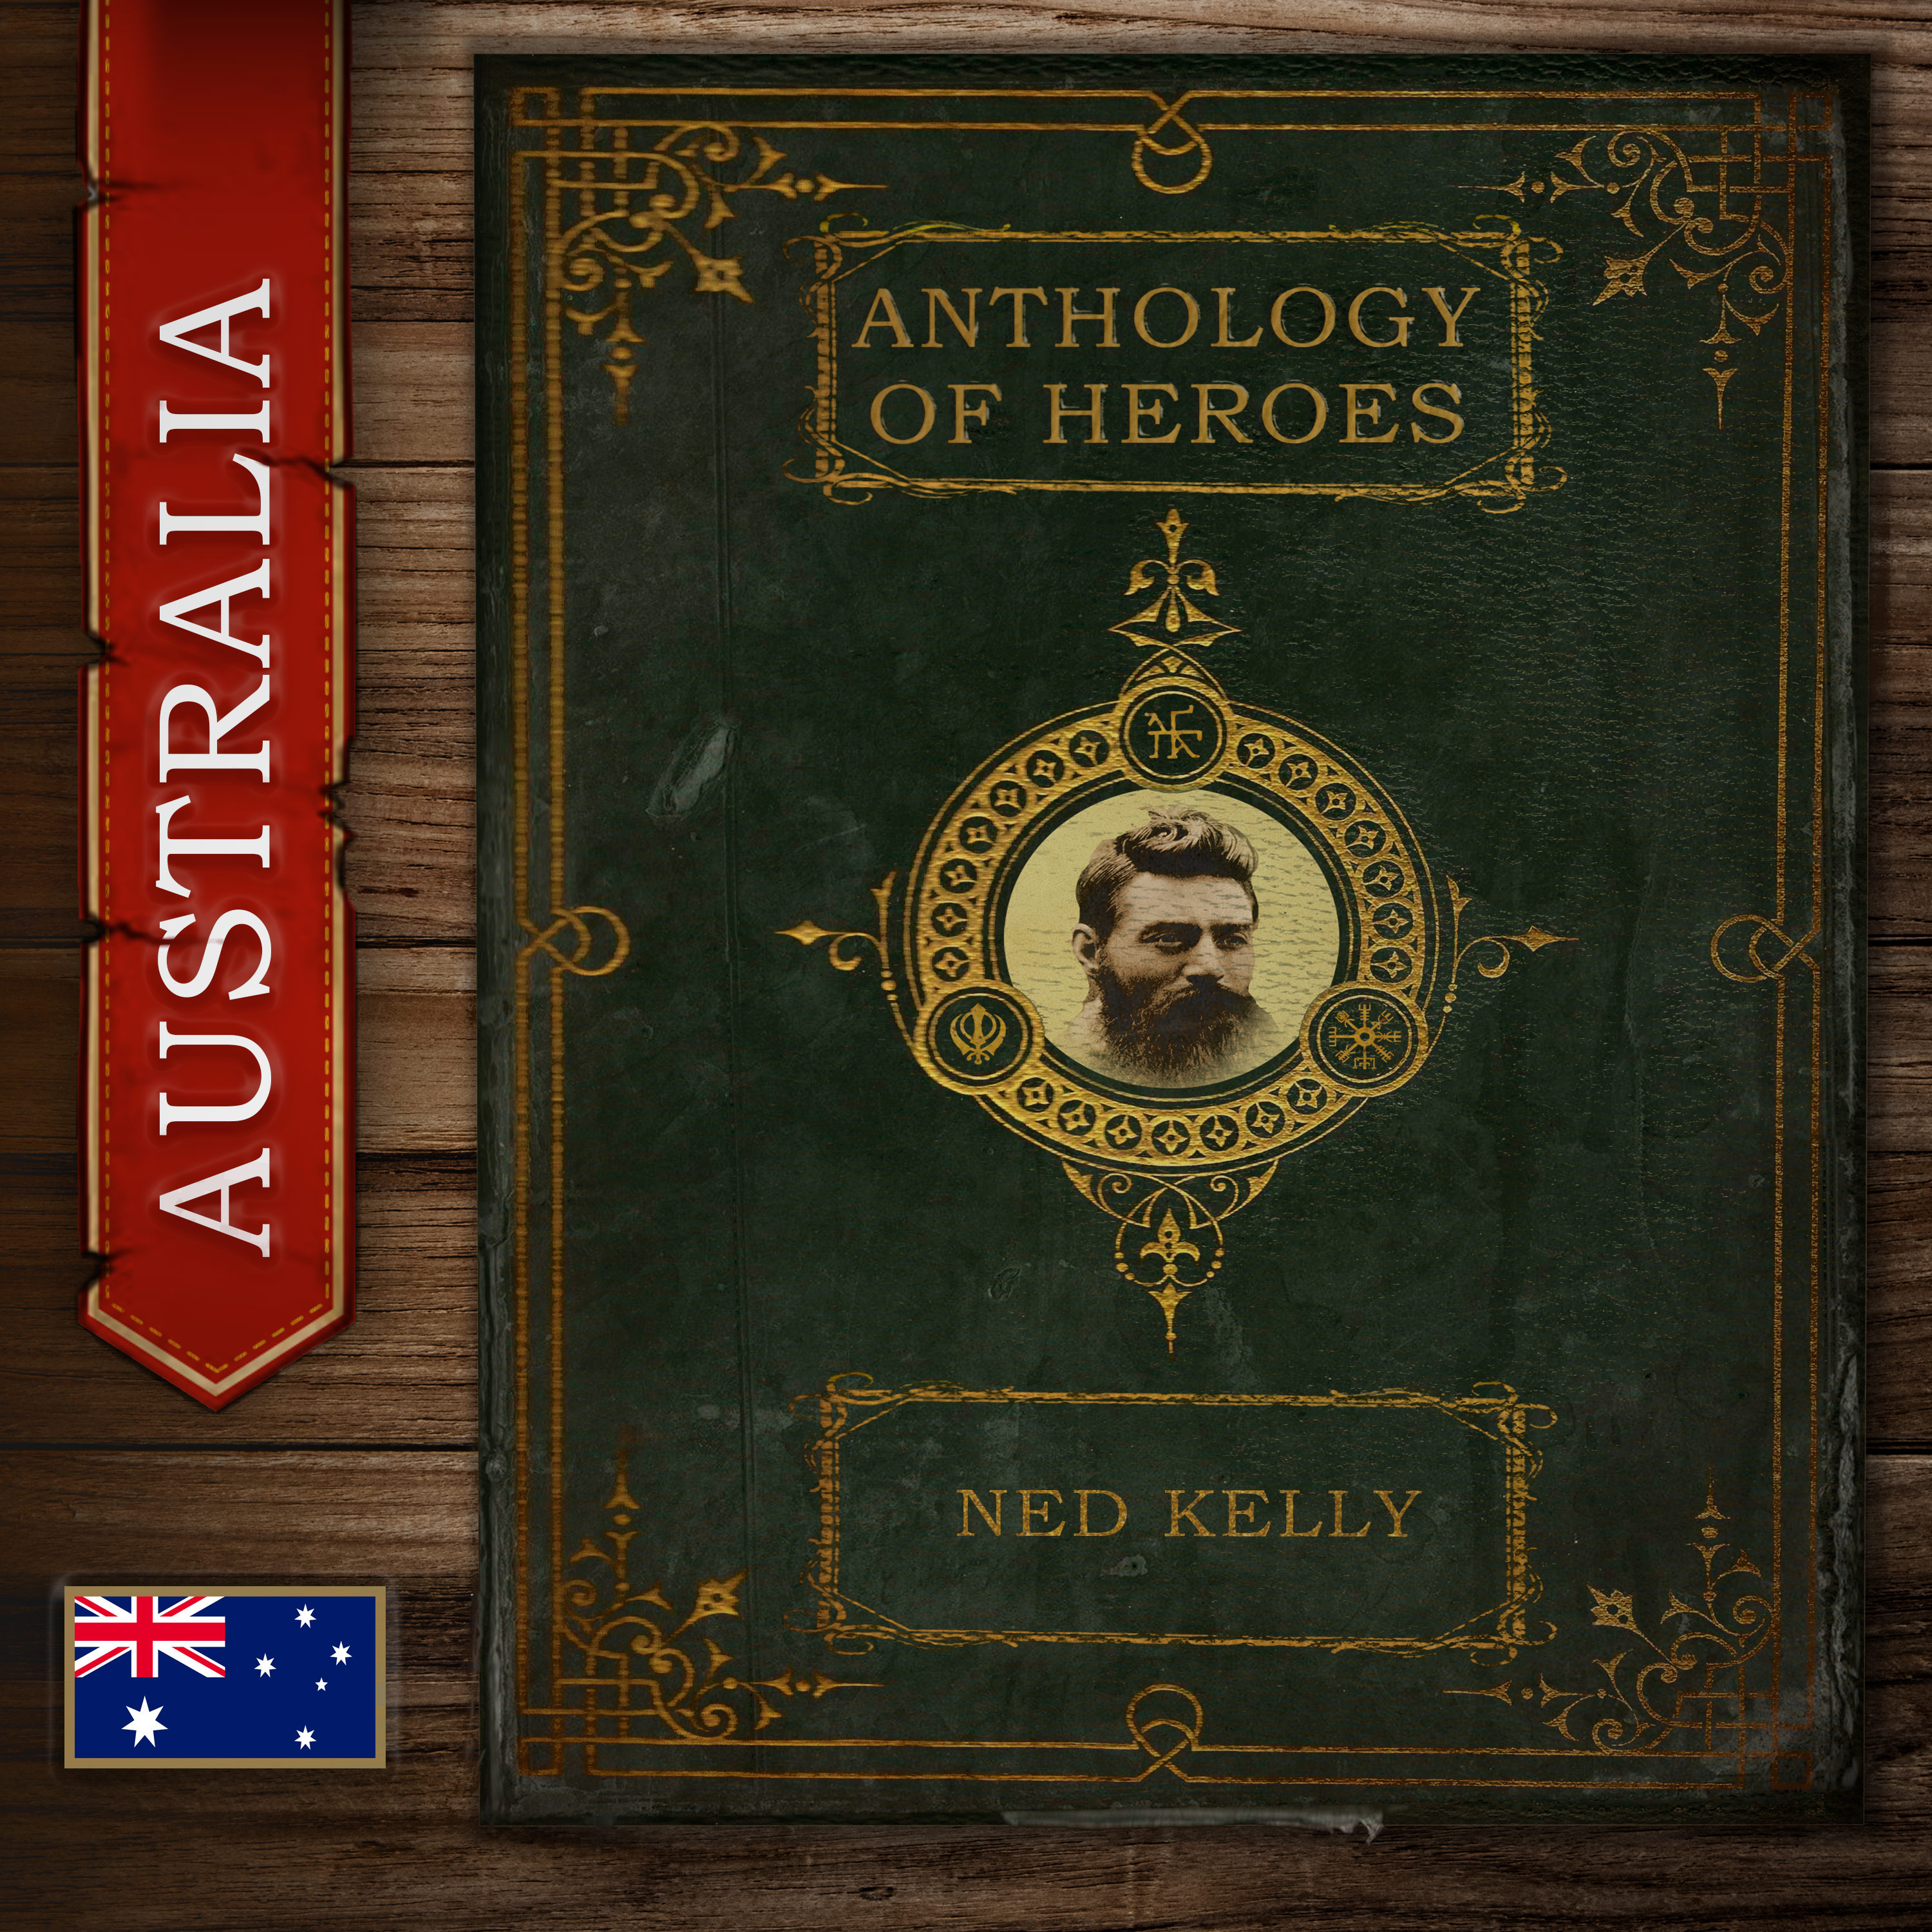 Ned Kelly, The Last Bushranger Image